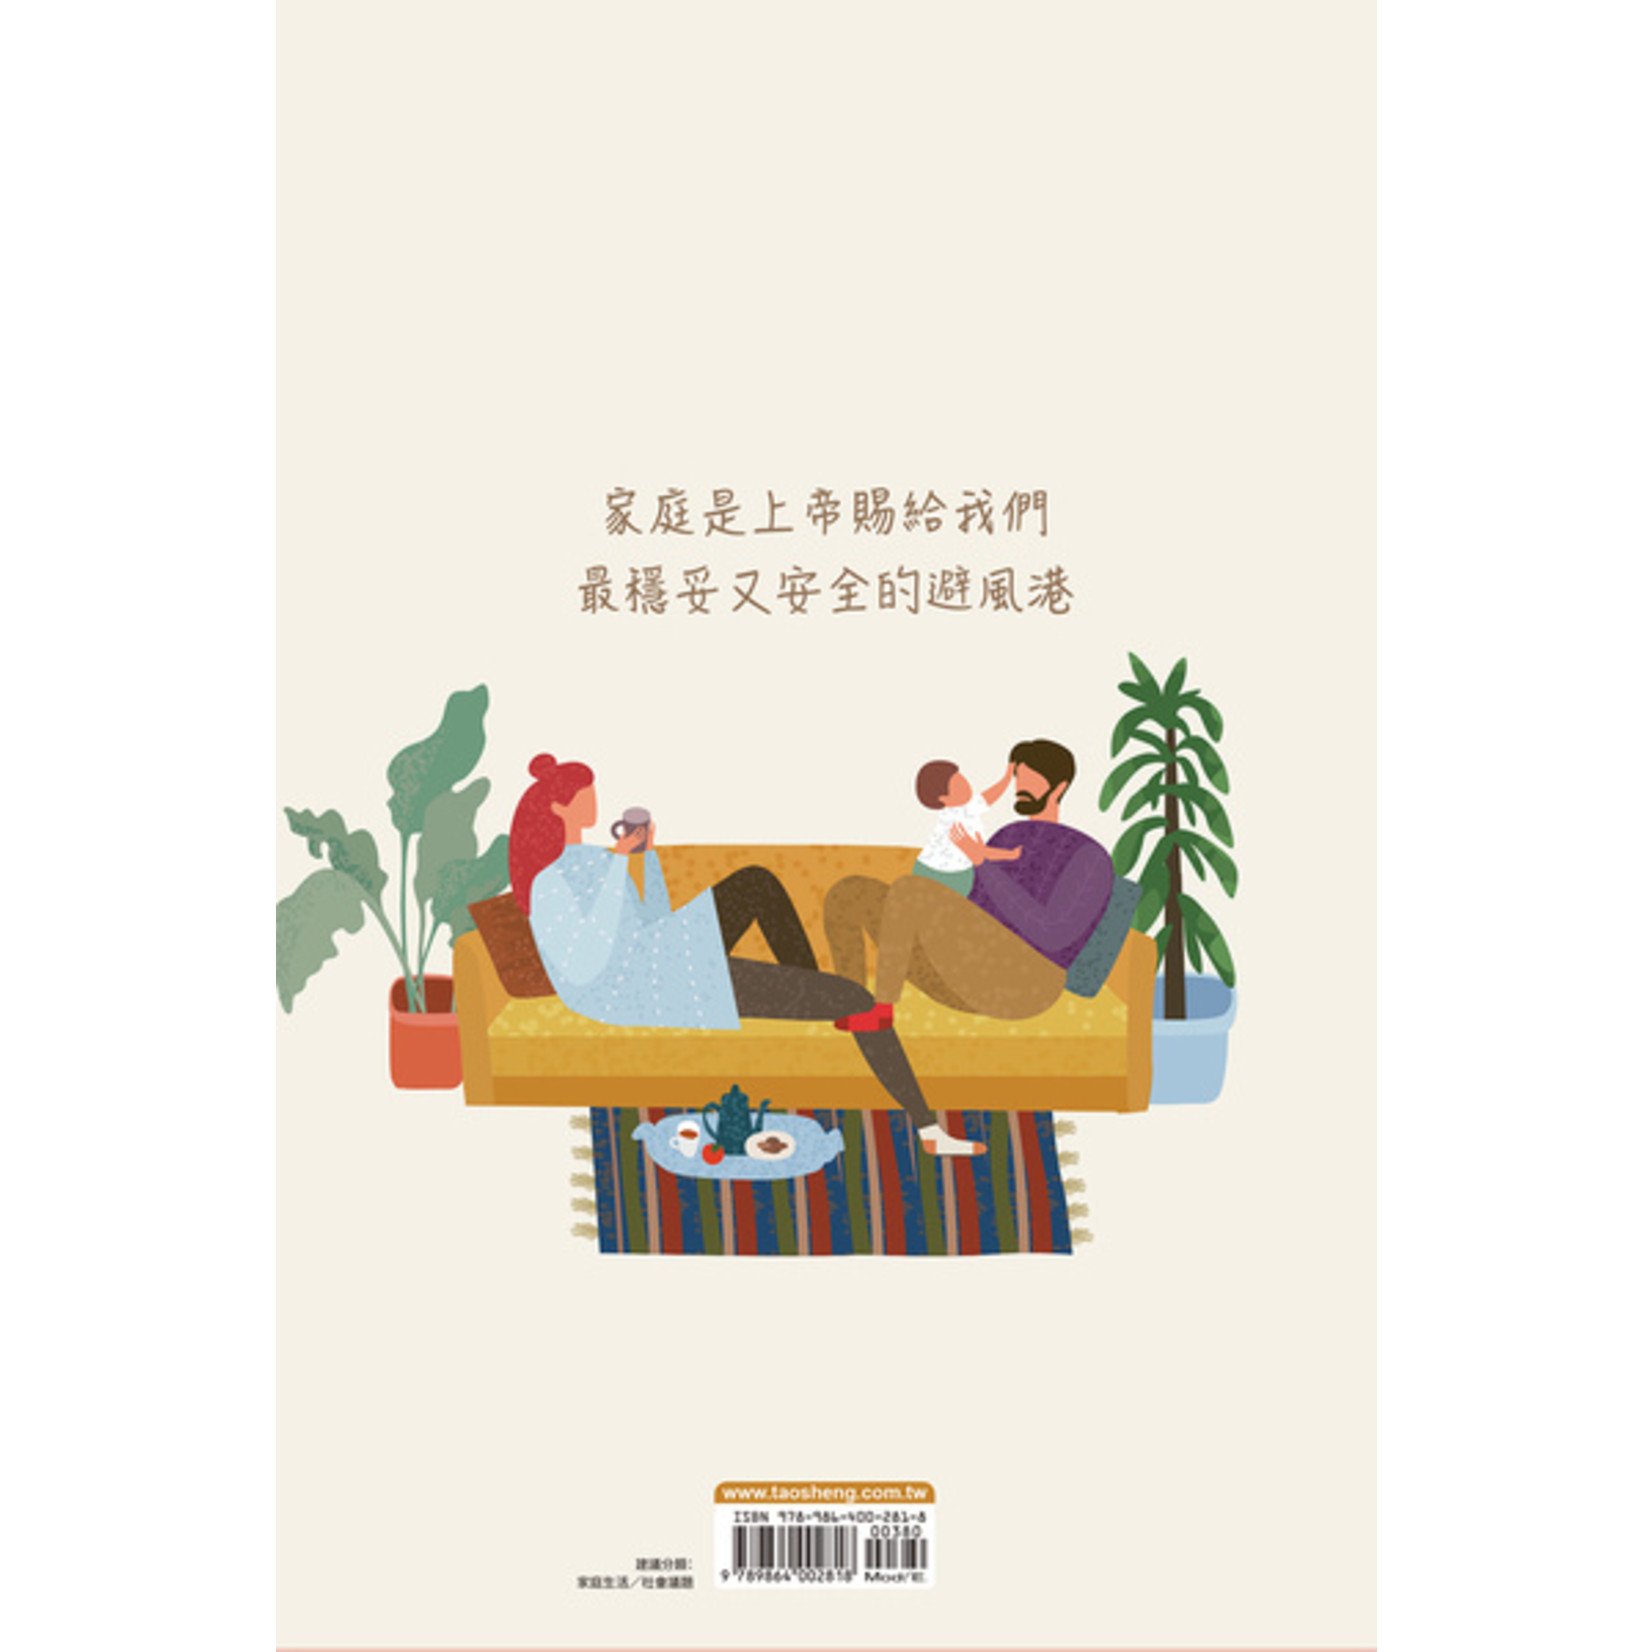 道聲 Taosheng Taiwan 一家之主：基督教家庭生活教育指南 The Christian Educator's Handbook on Family Life Education